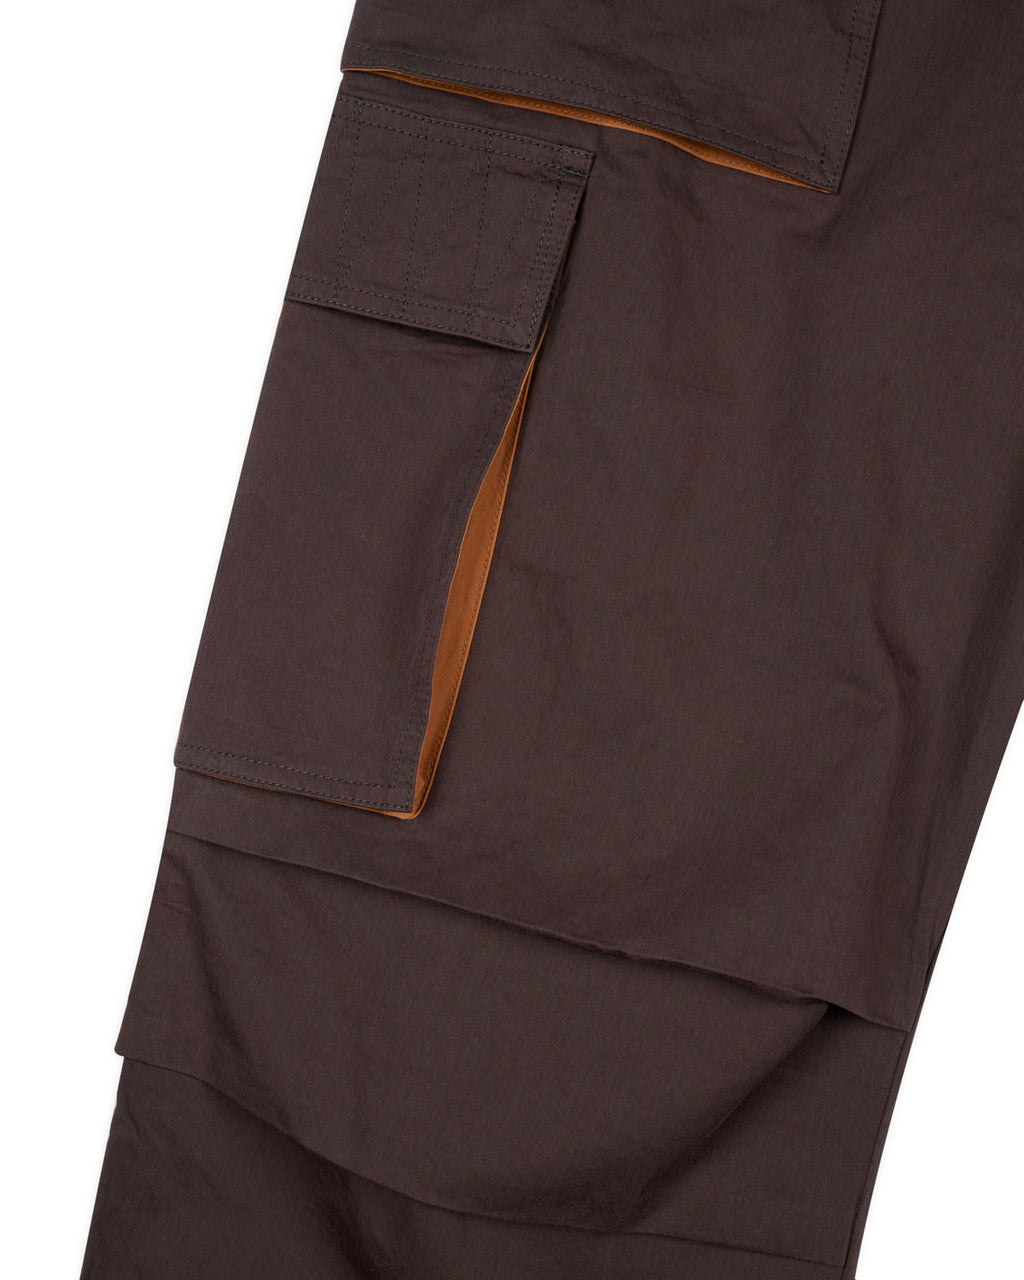 Adjustable Skate Pant, Dark Brown – Lo-Fi